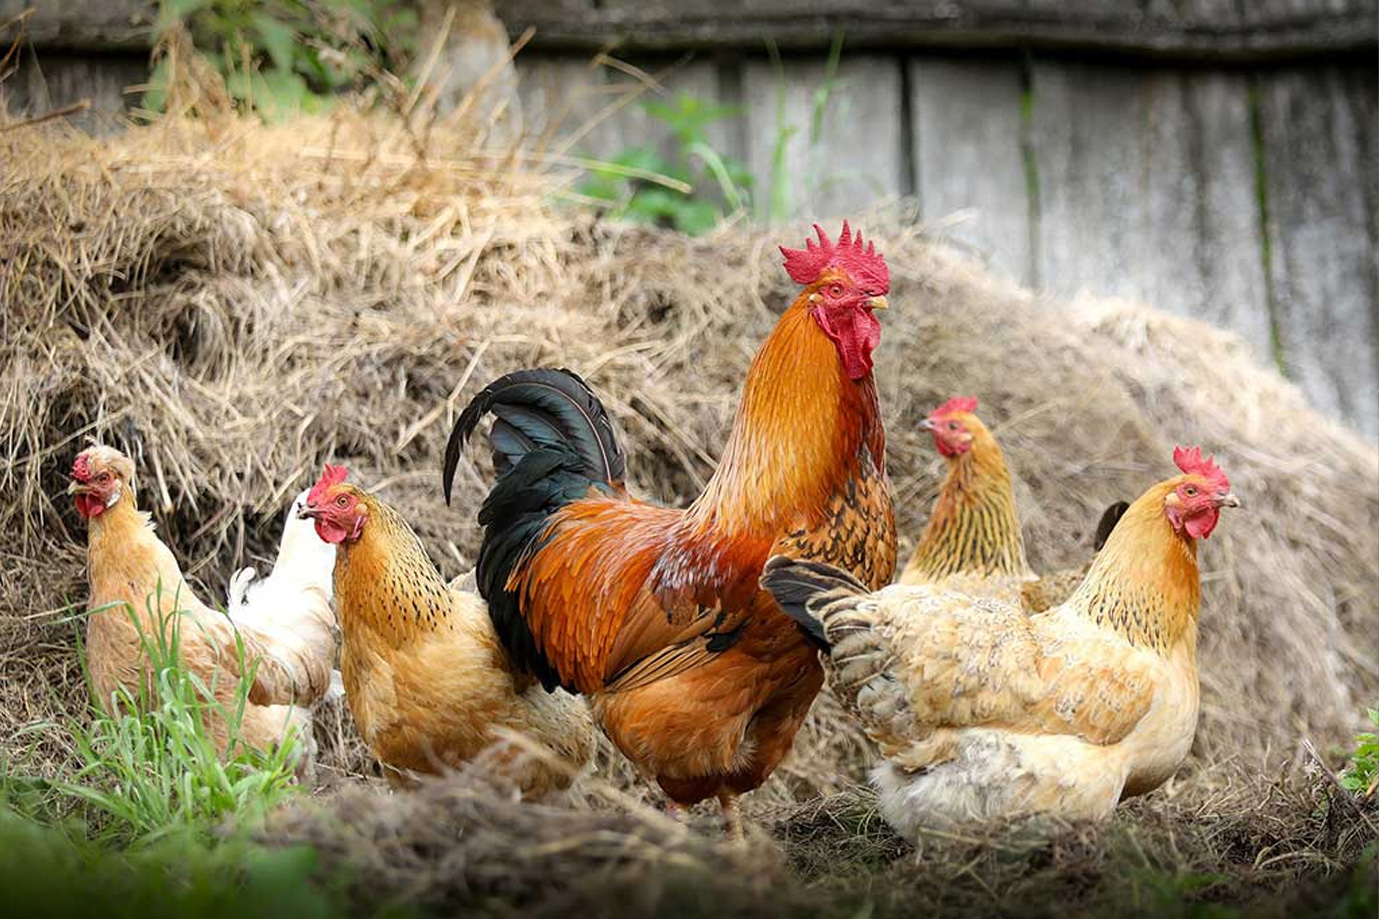 Avian influenza: Prevention Zone declared across Great Britain